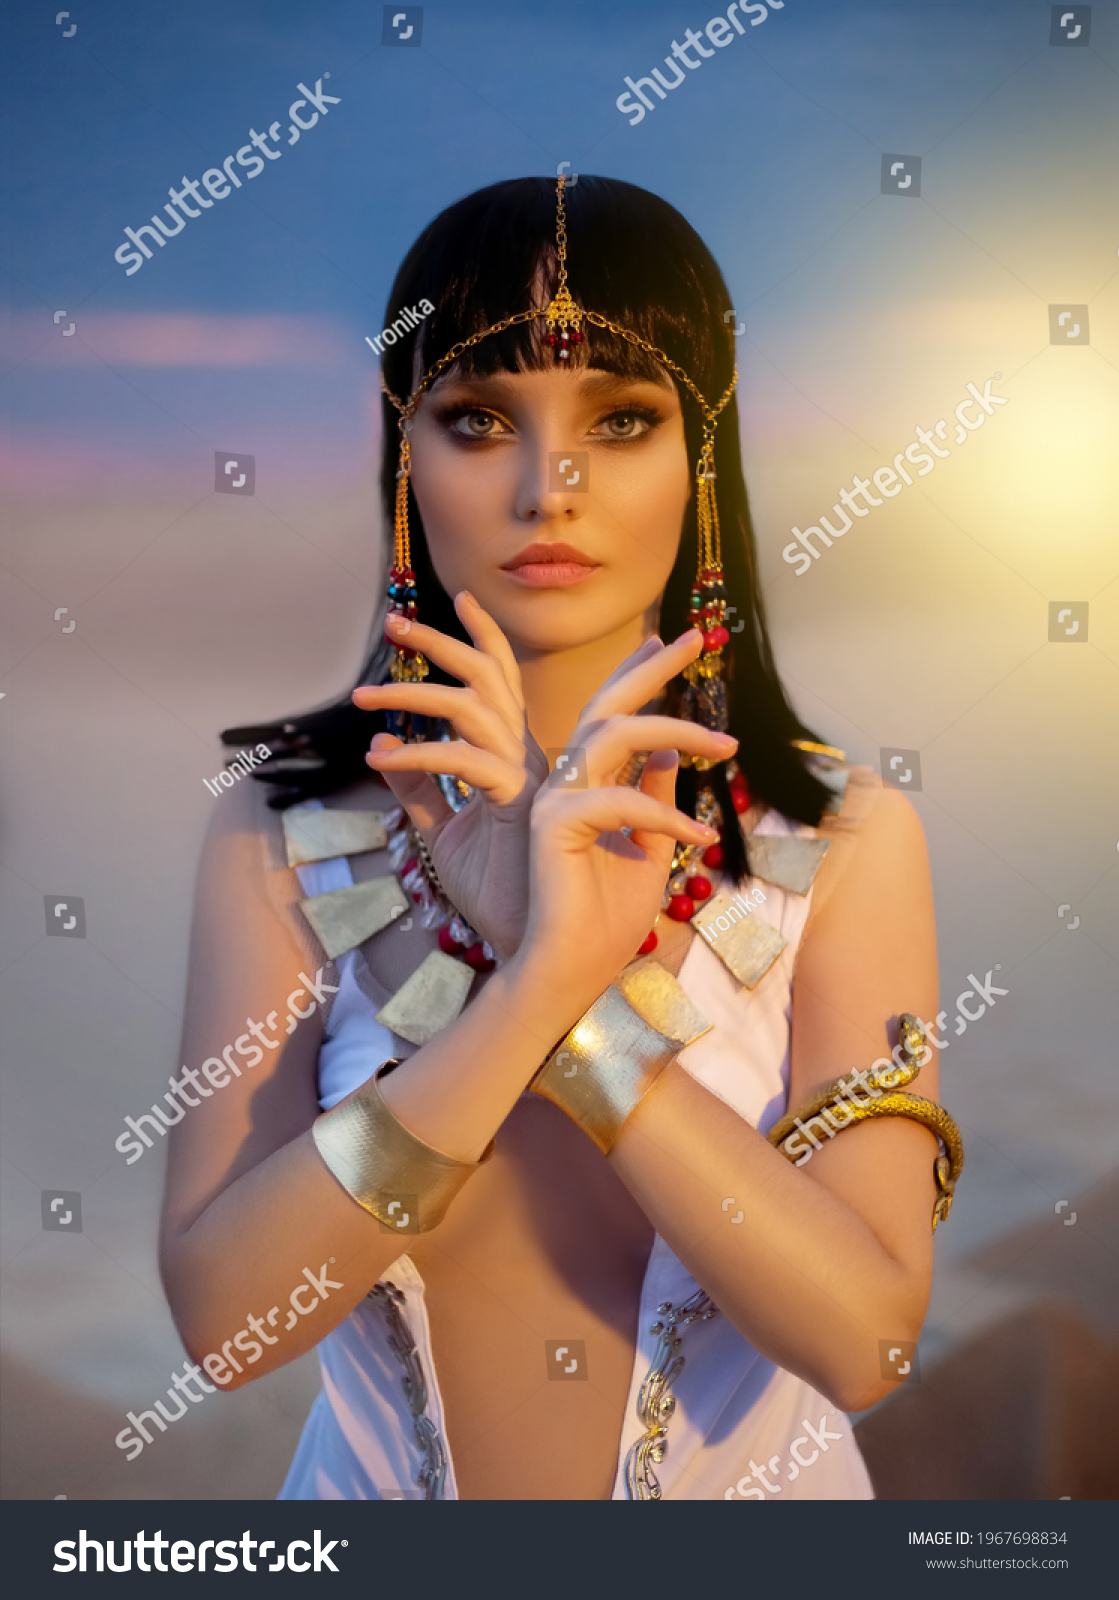 Egypt Style Woman Sexy Beautiful Girl pic